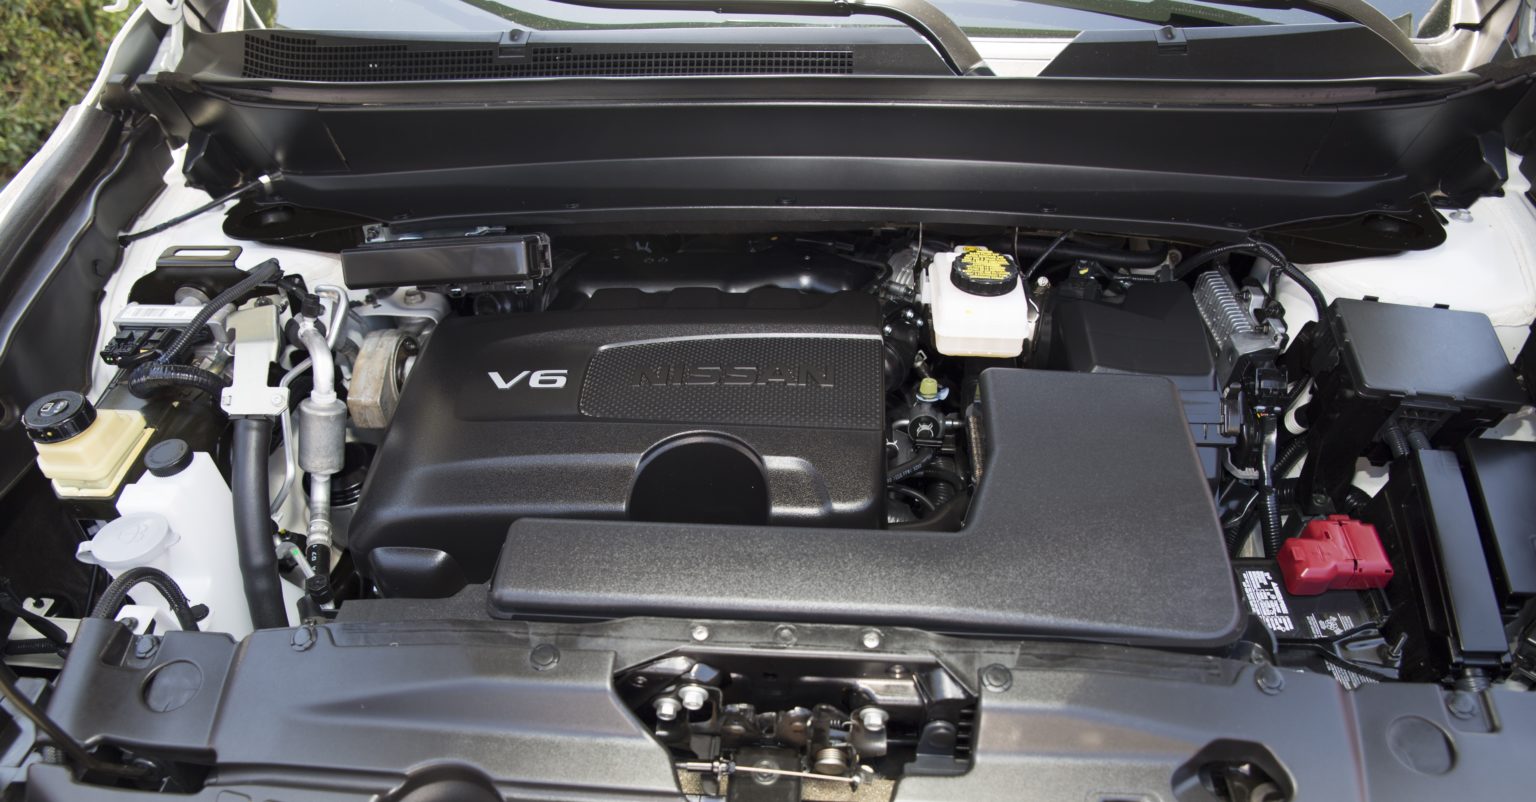 2017 Nissan Pathfinder Features 3.5liter V6 Engine with